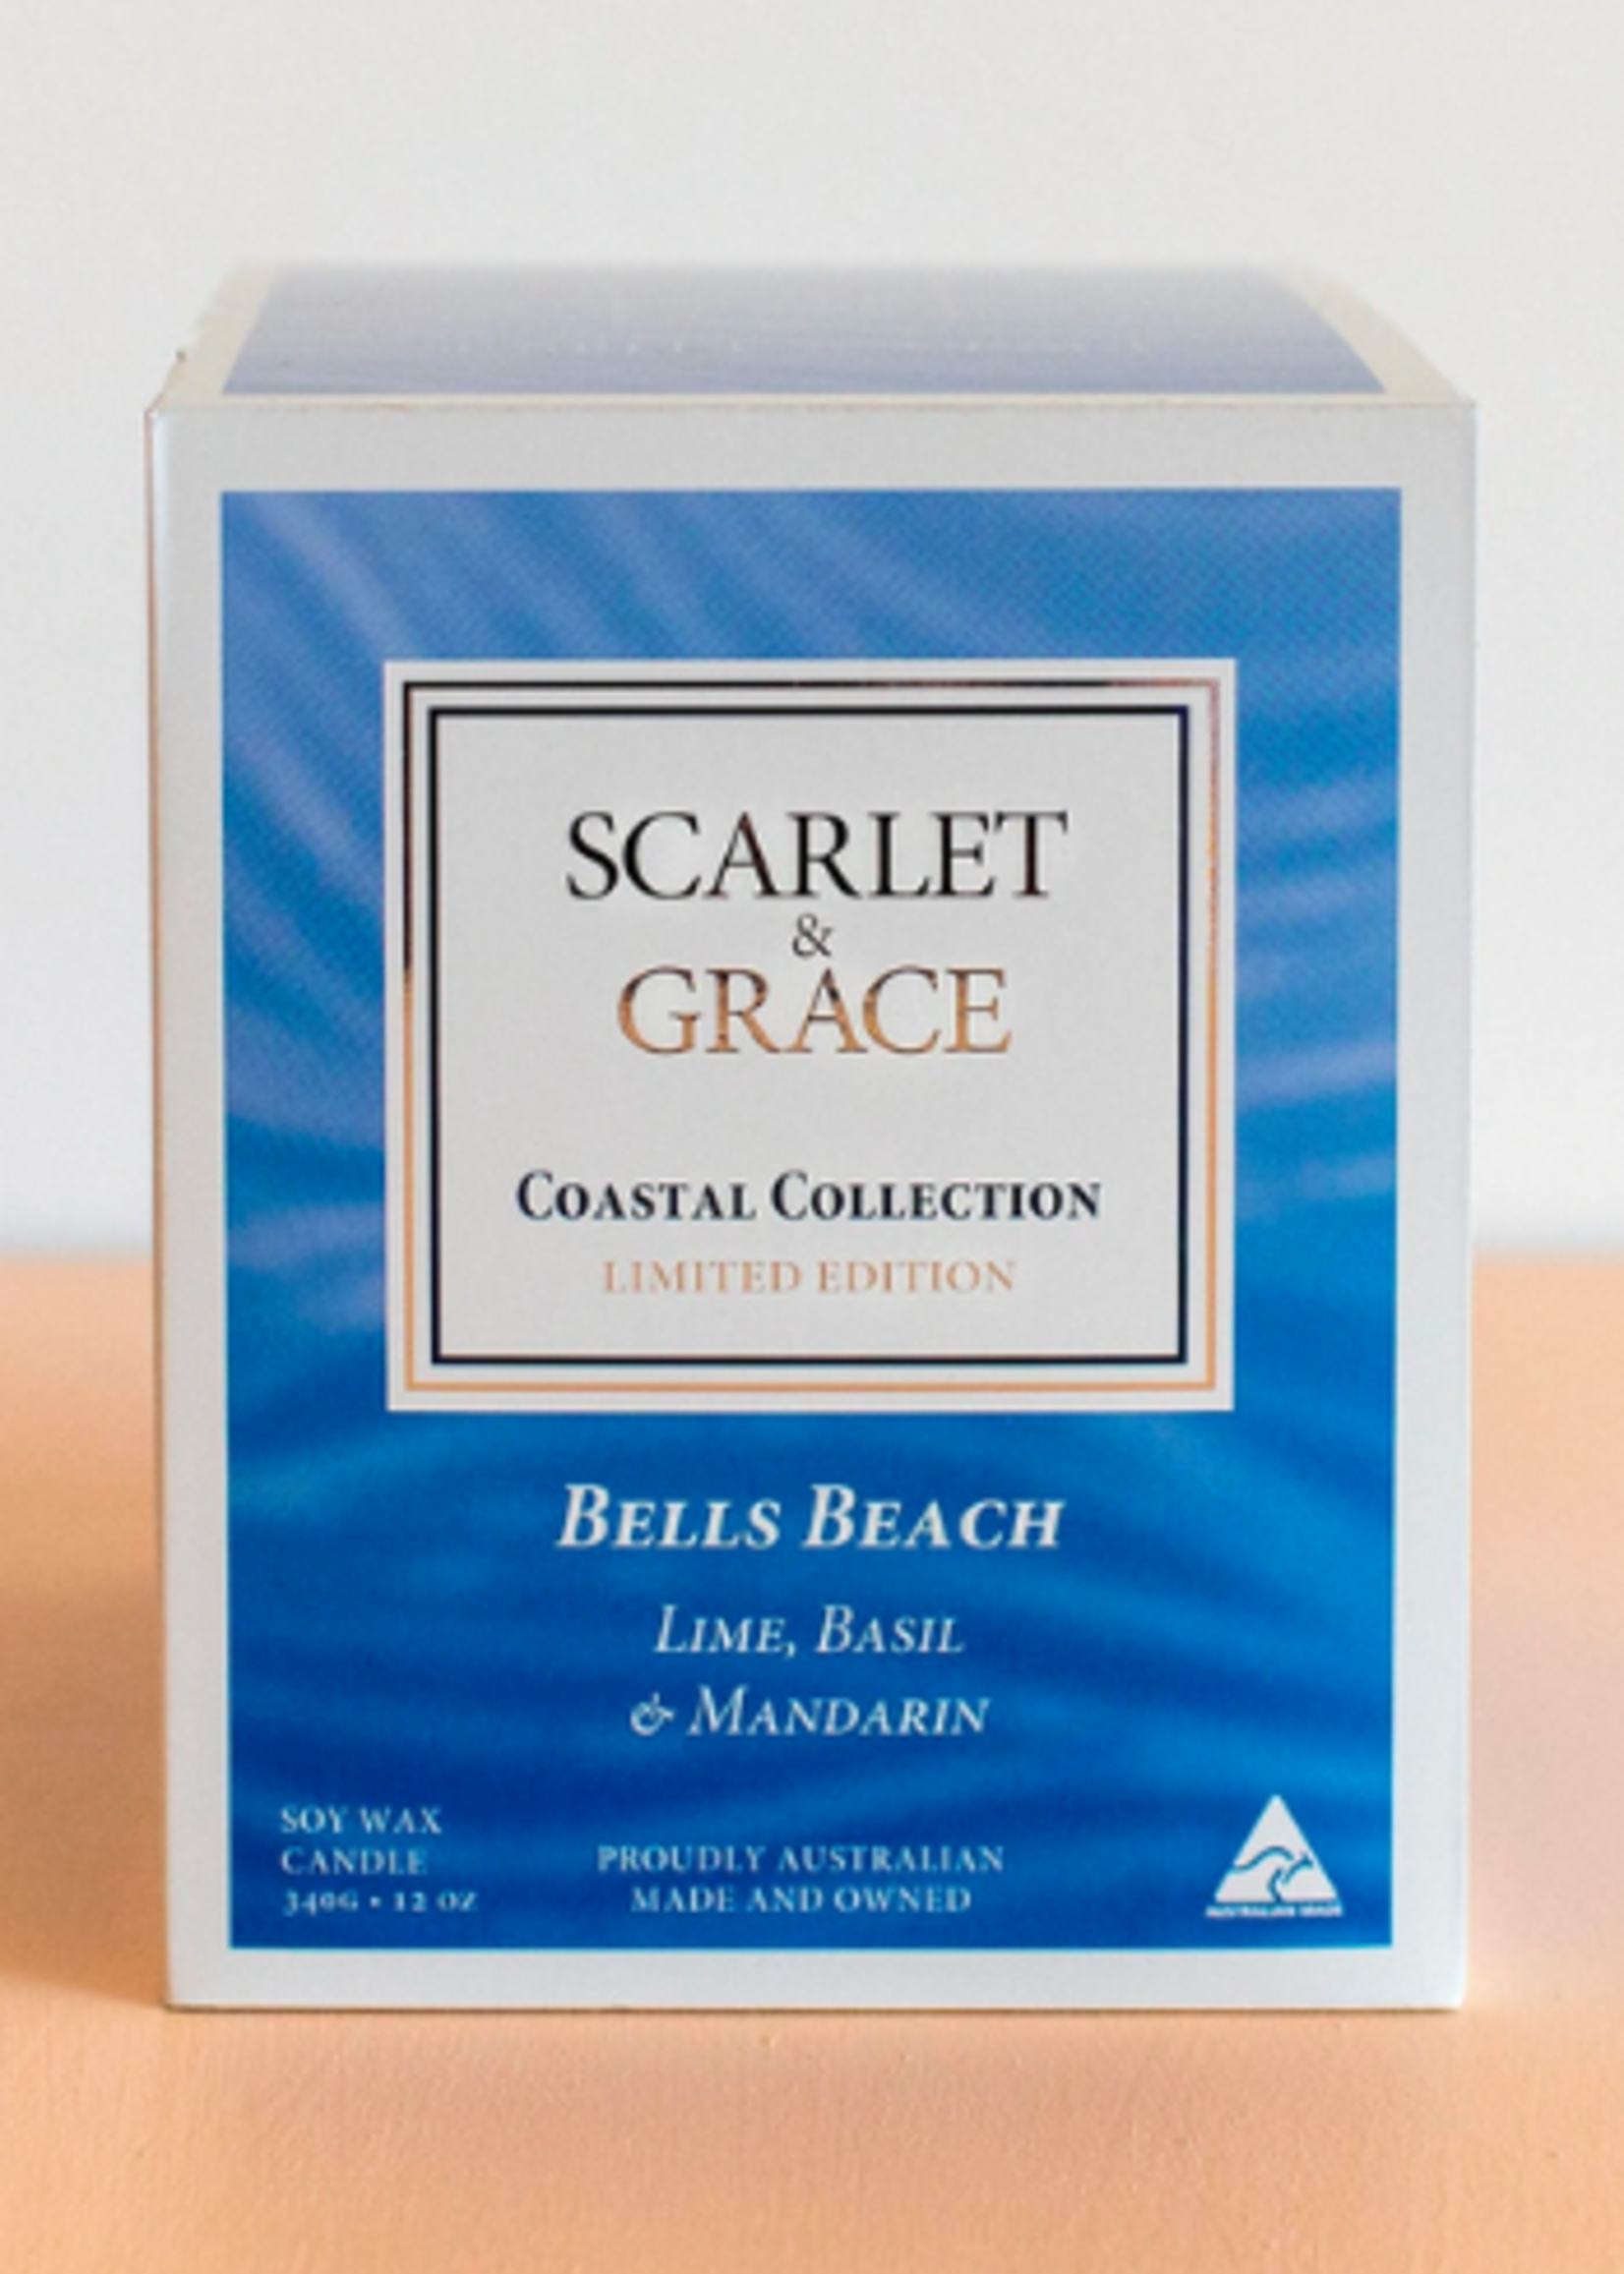 Scarlet & Grace 340g Soy Wax Candle - Bells Beach, Lime Basil & Mandarin